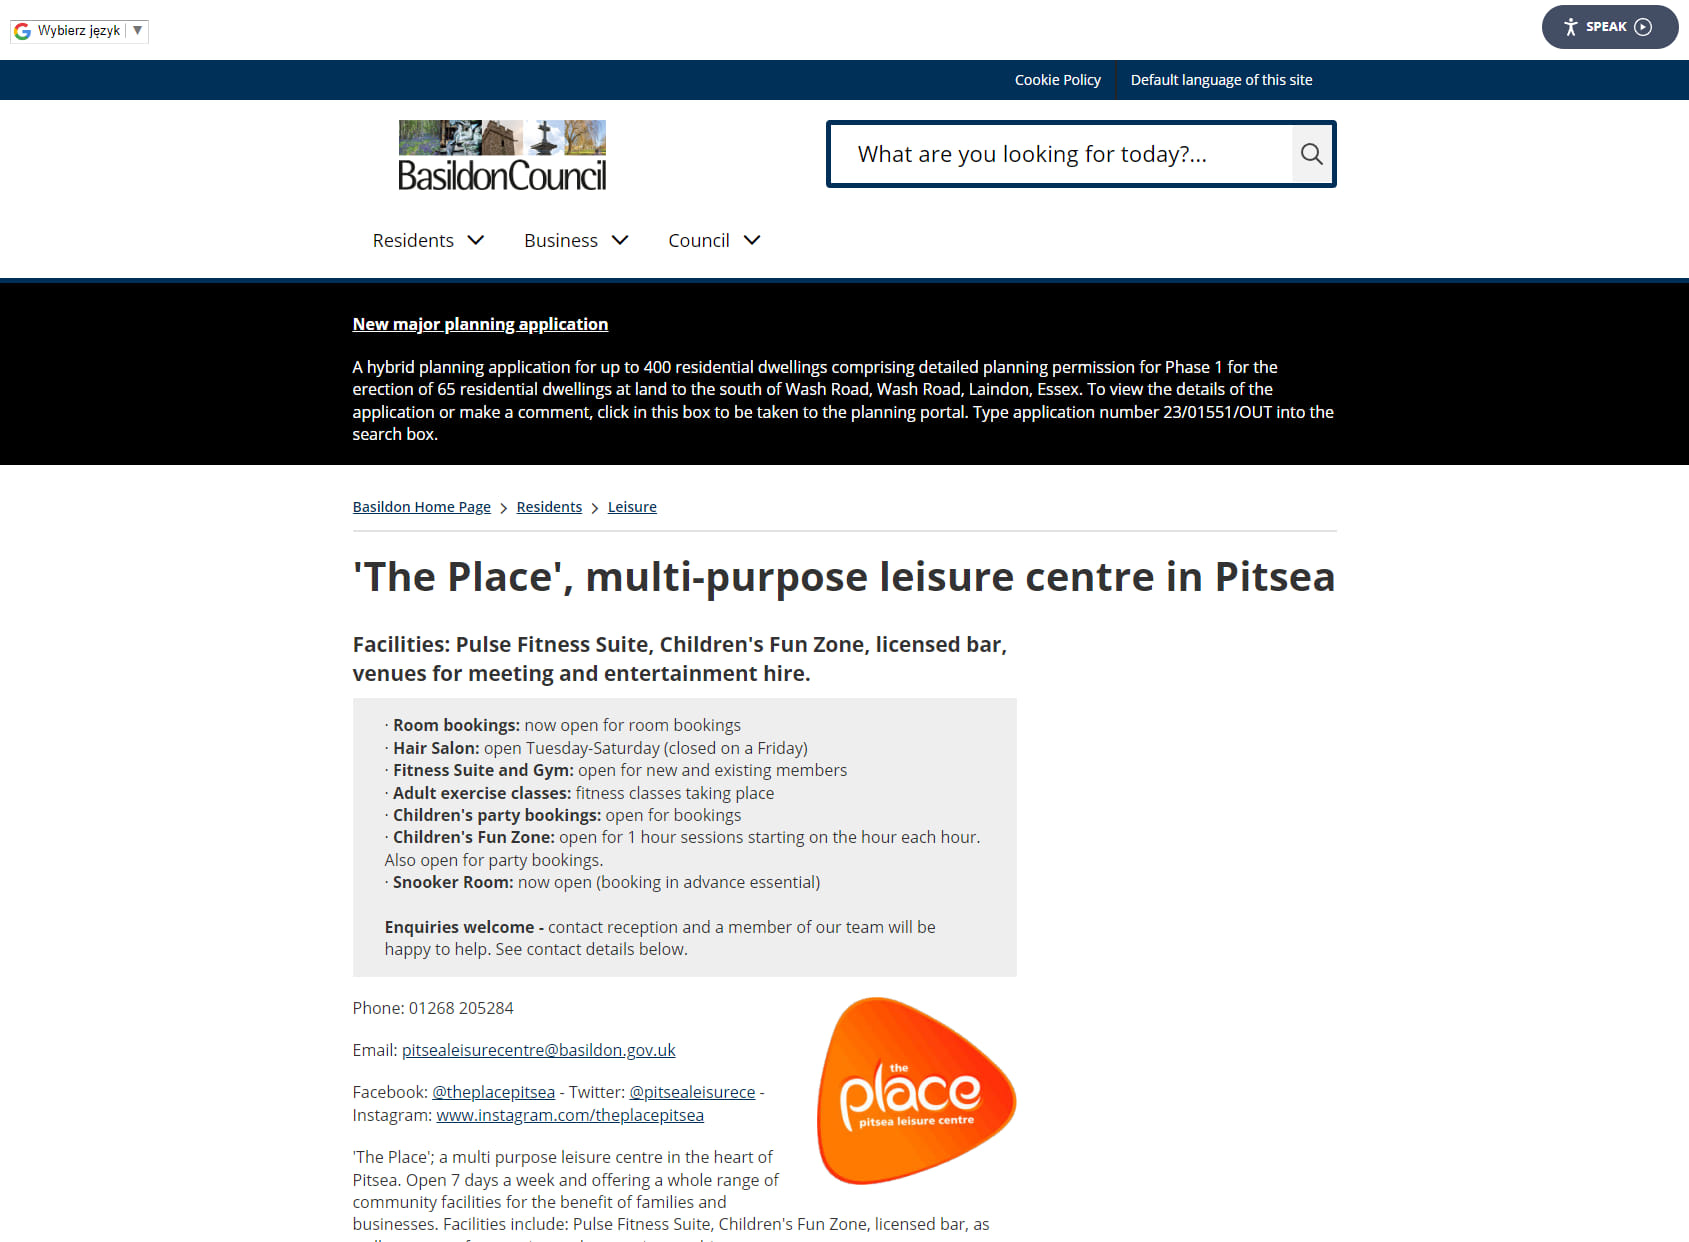 The Place, Pitsea Leisure Centre